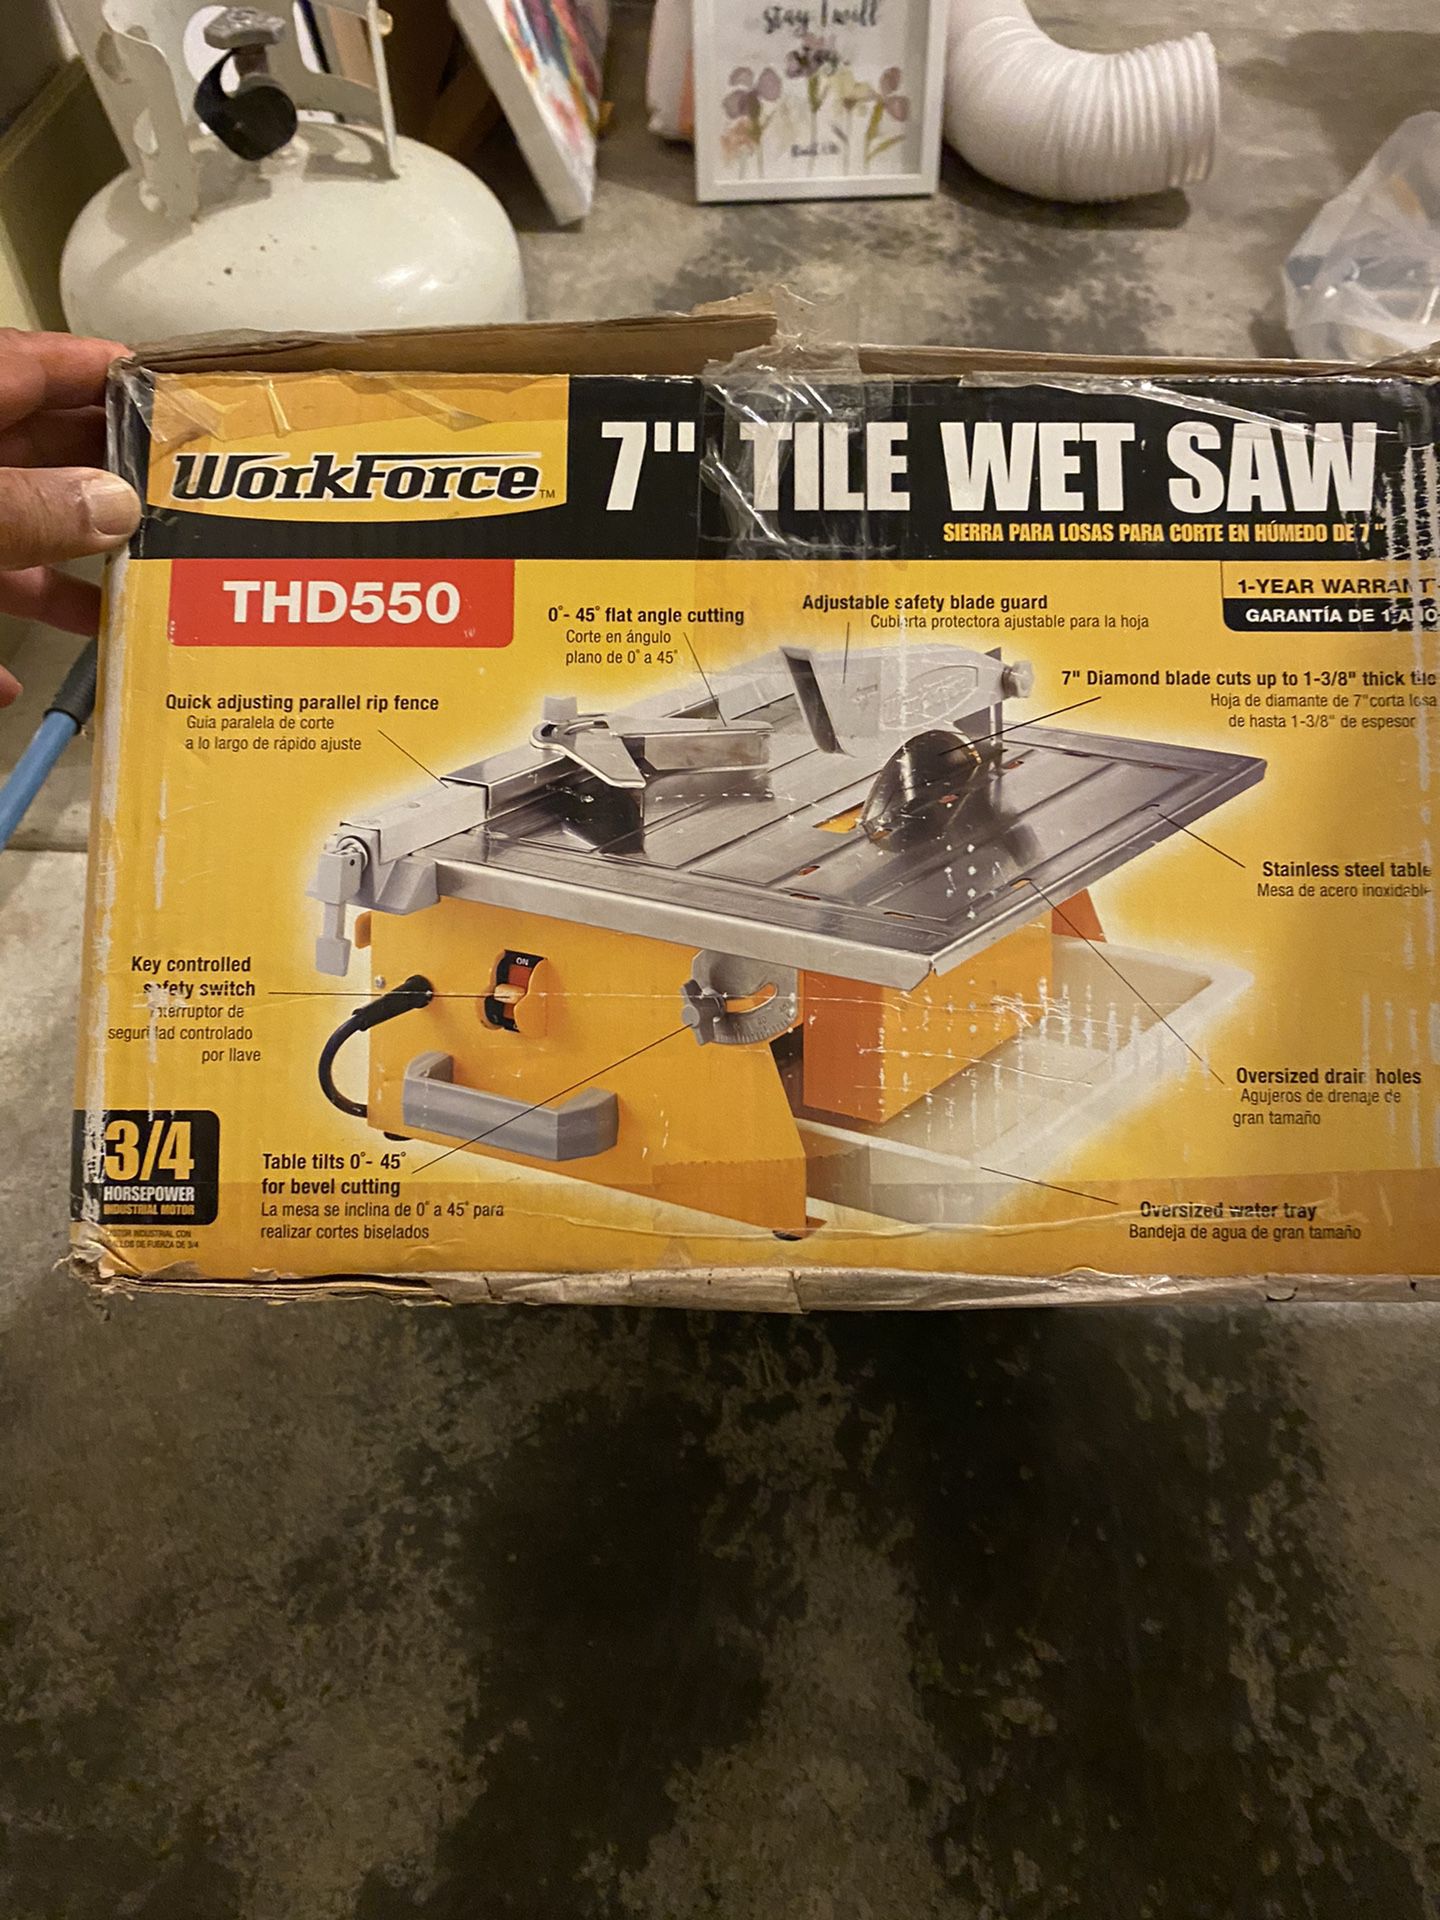 Tile wet saw